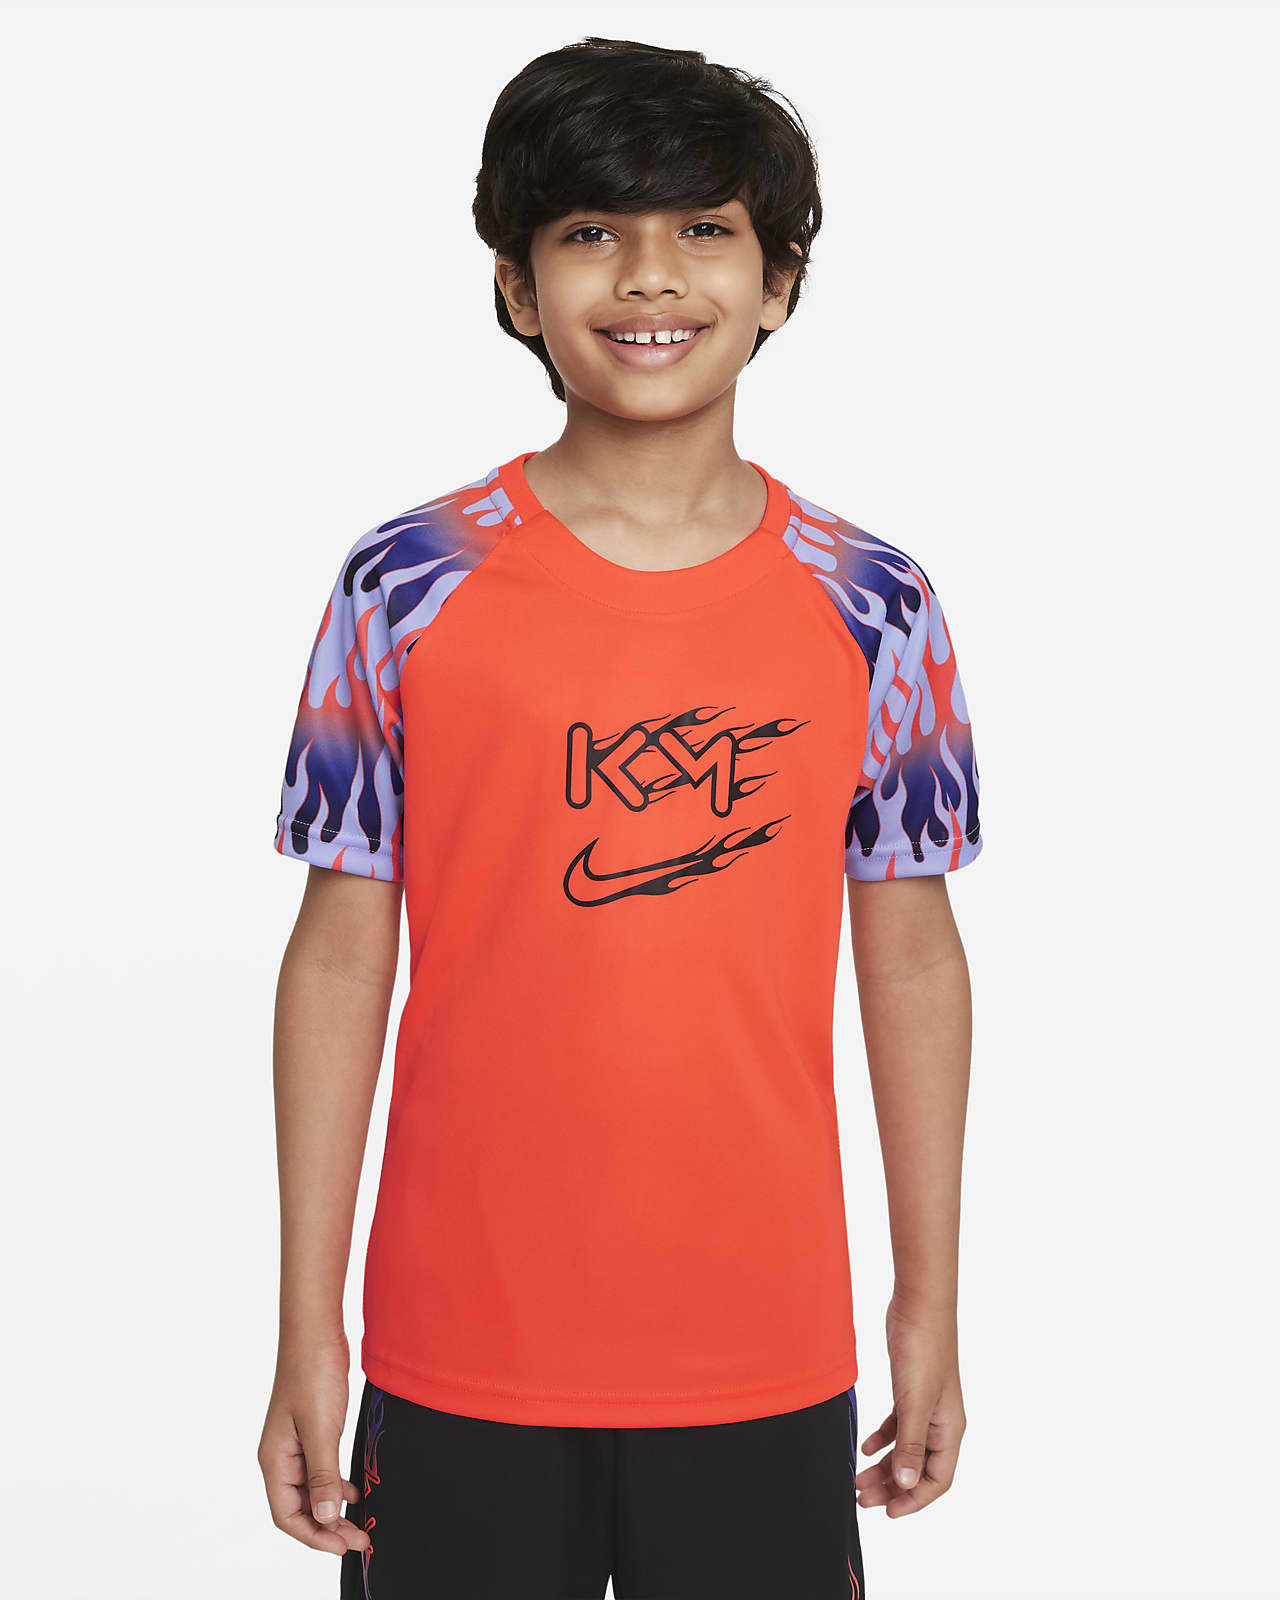 Nike Dri-FIT Kylian Mbappé Older Kids' Football Top